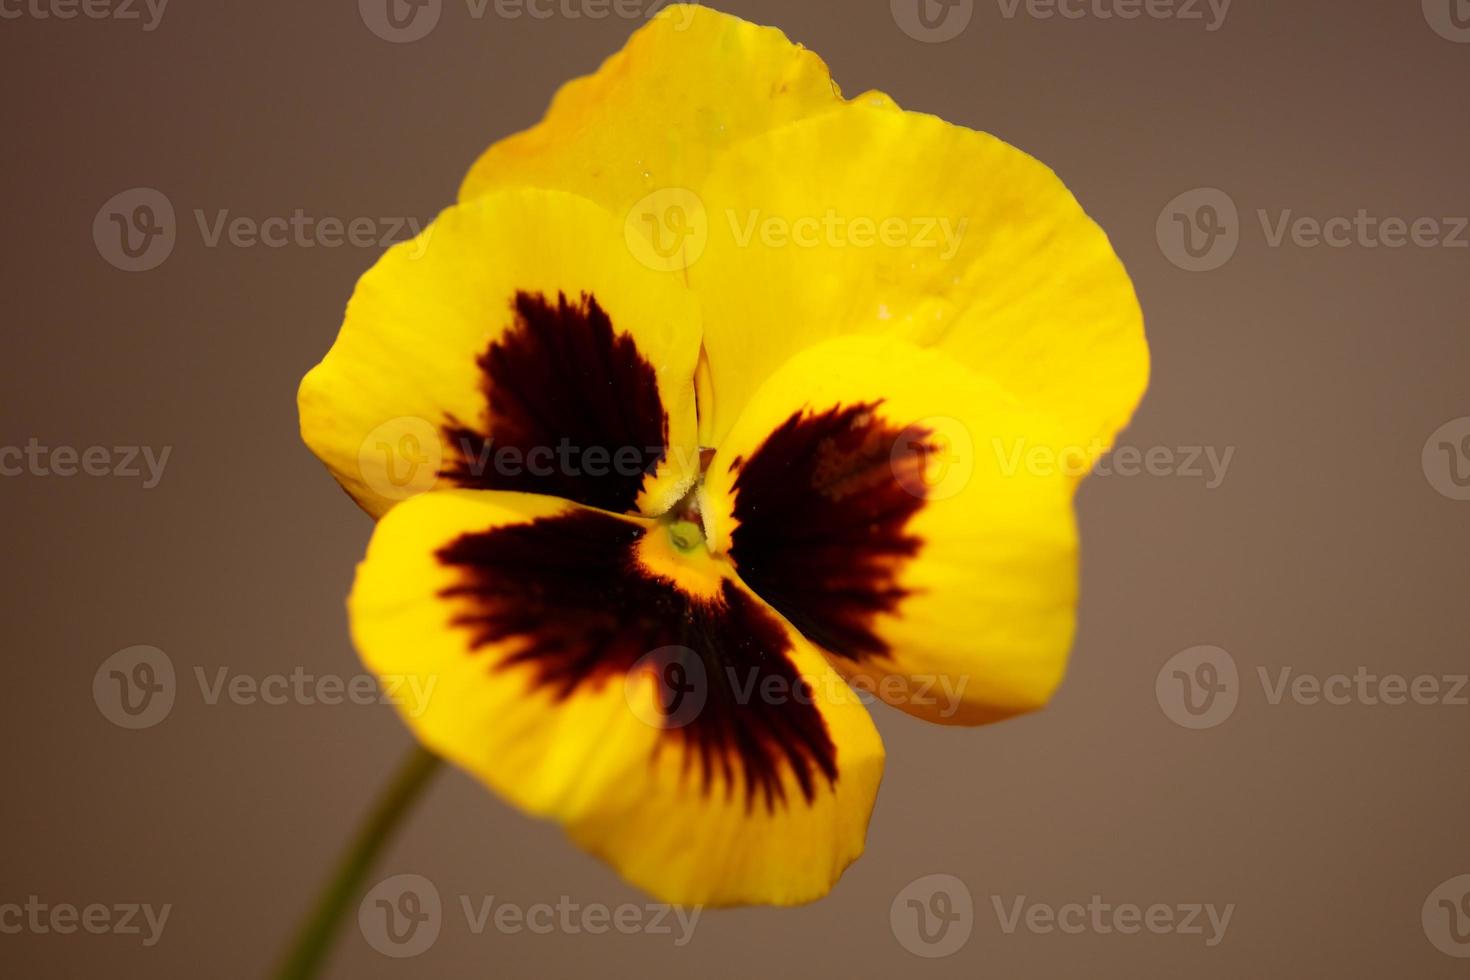 viola blomma blomma familjen violaceae närbild botaniskt tryck foto